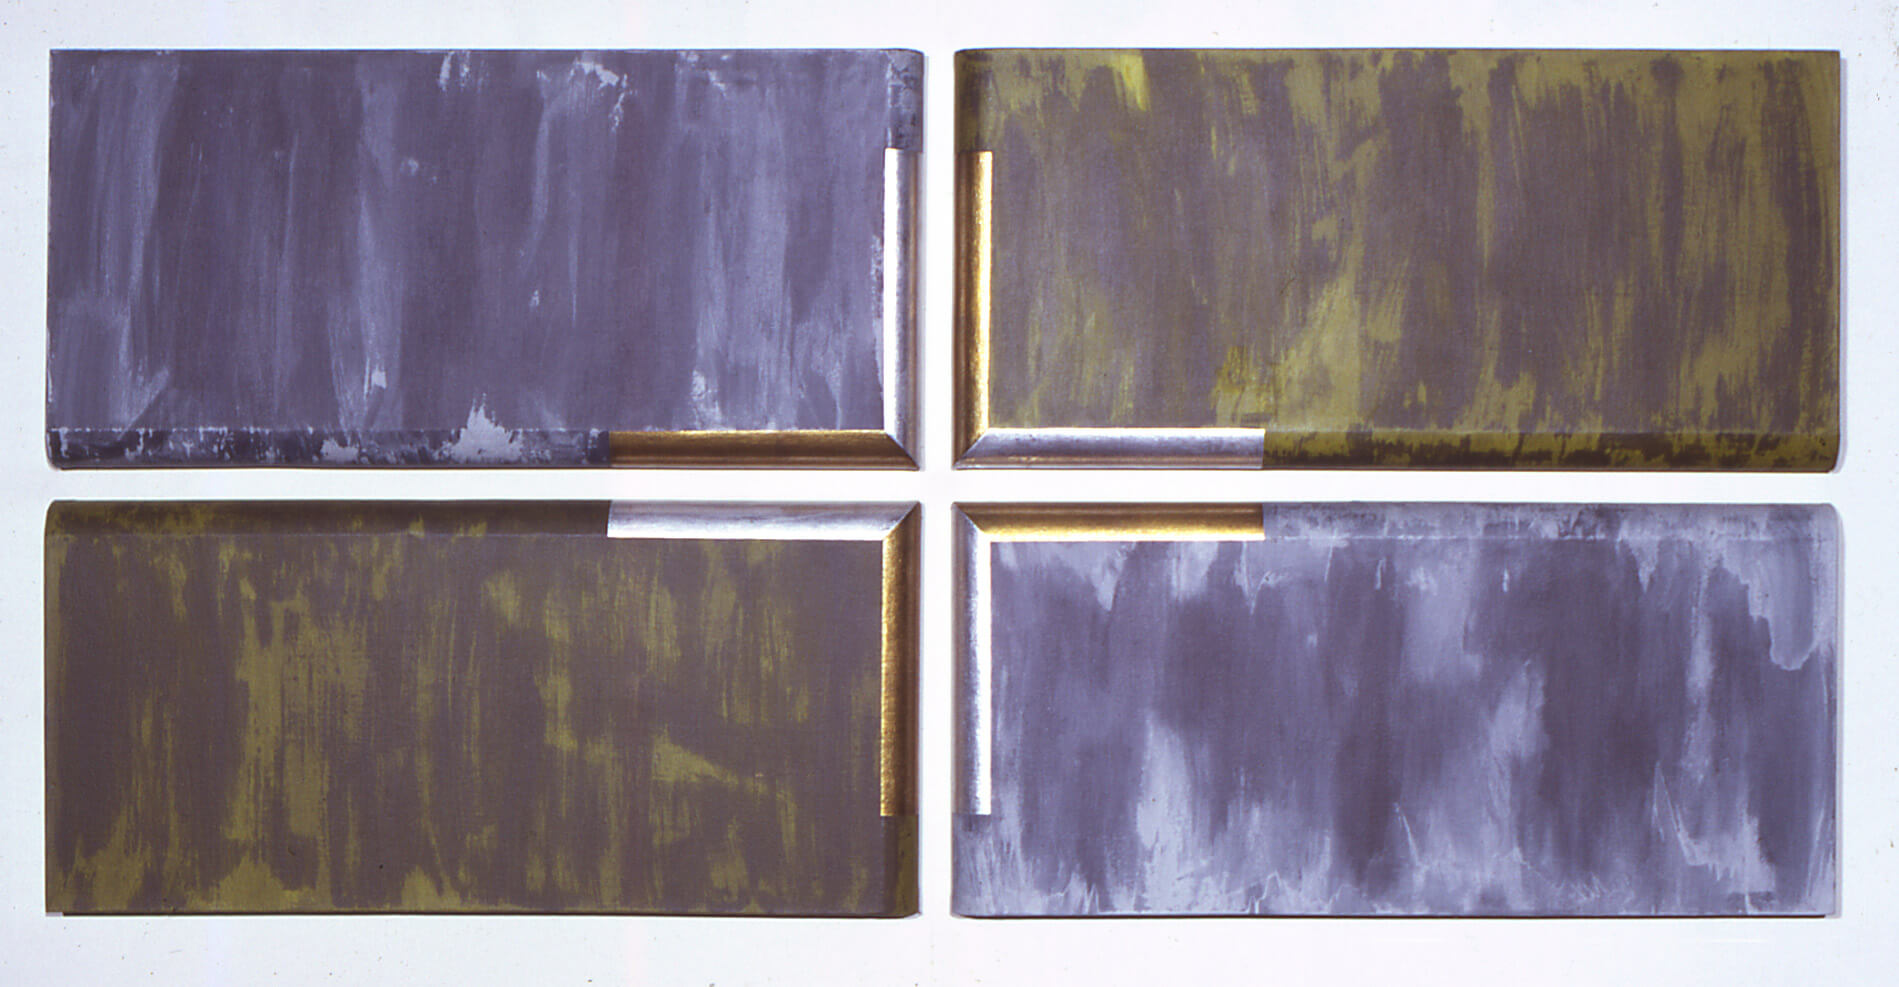 Dana Gordon, 1969-70, untitled, 29 x 61 inches, acrylic on canvas (4 panels) (courtesy of the artist)